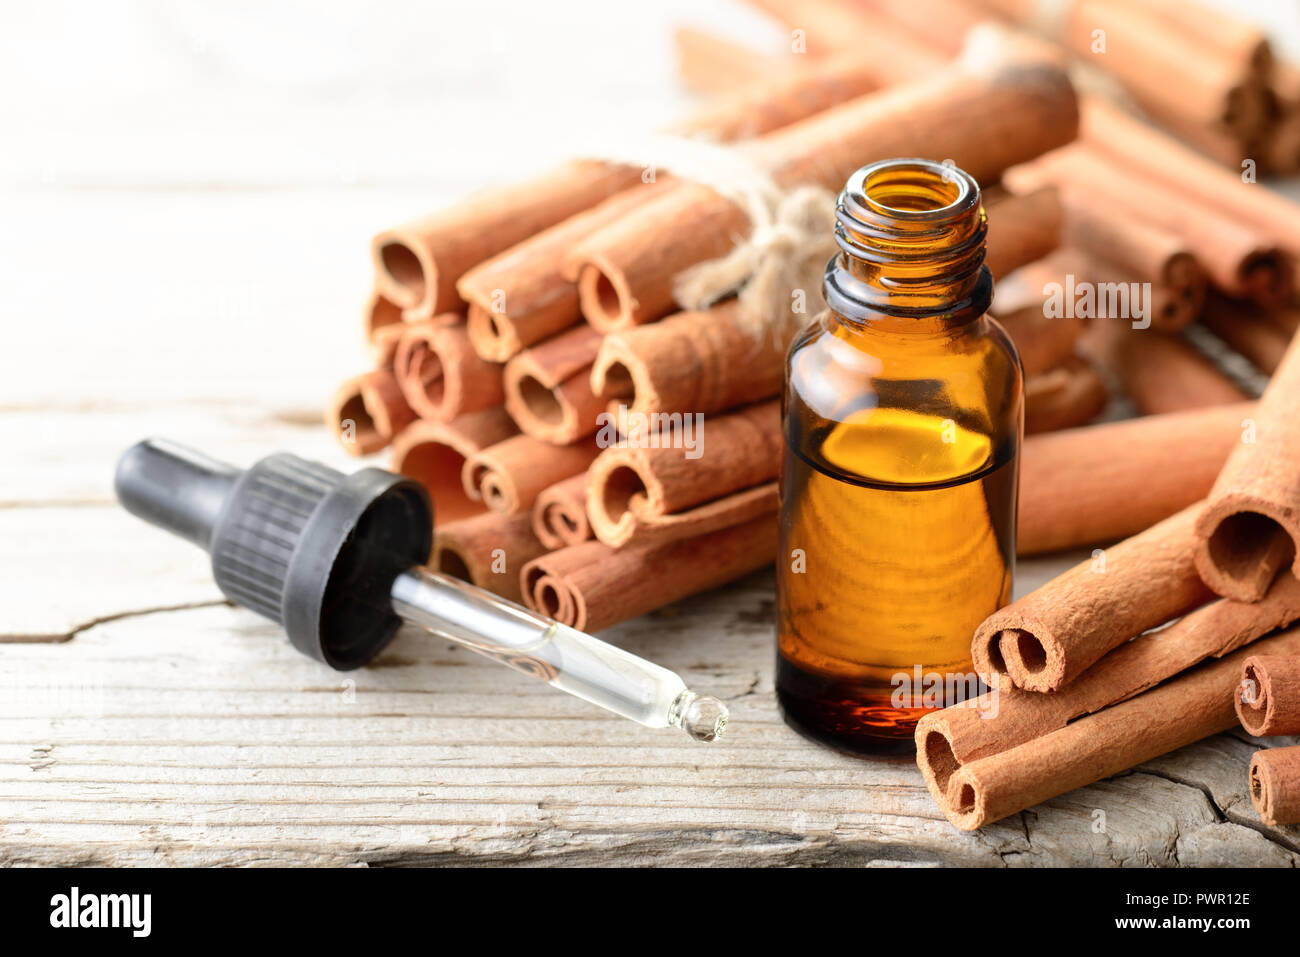 cinnamon essential oil in the glass bottle Stock Photo